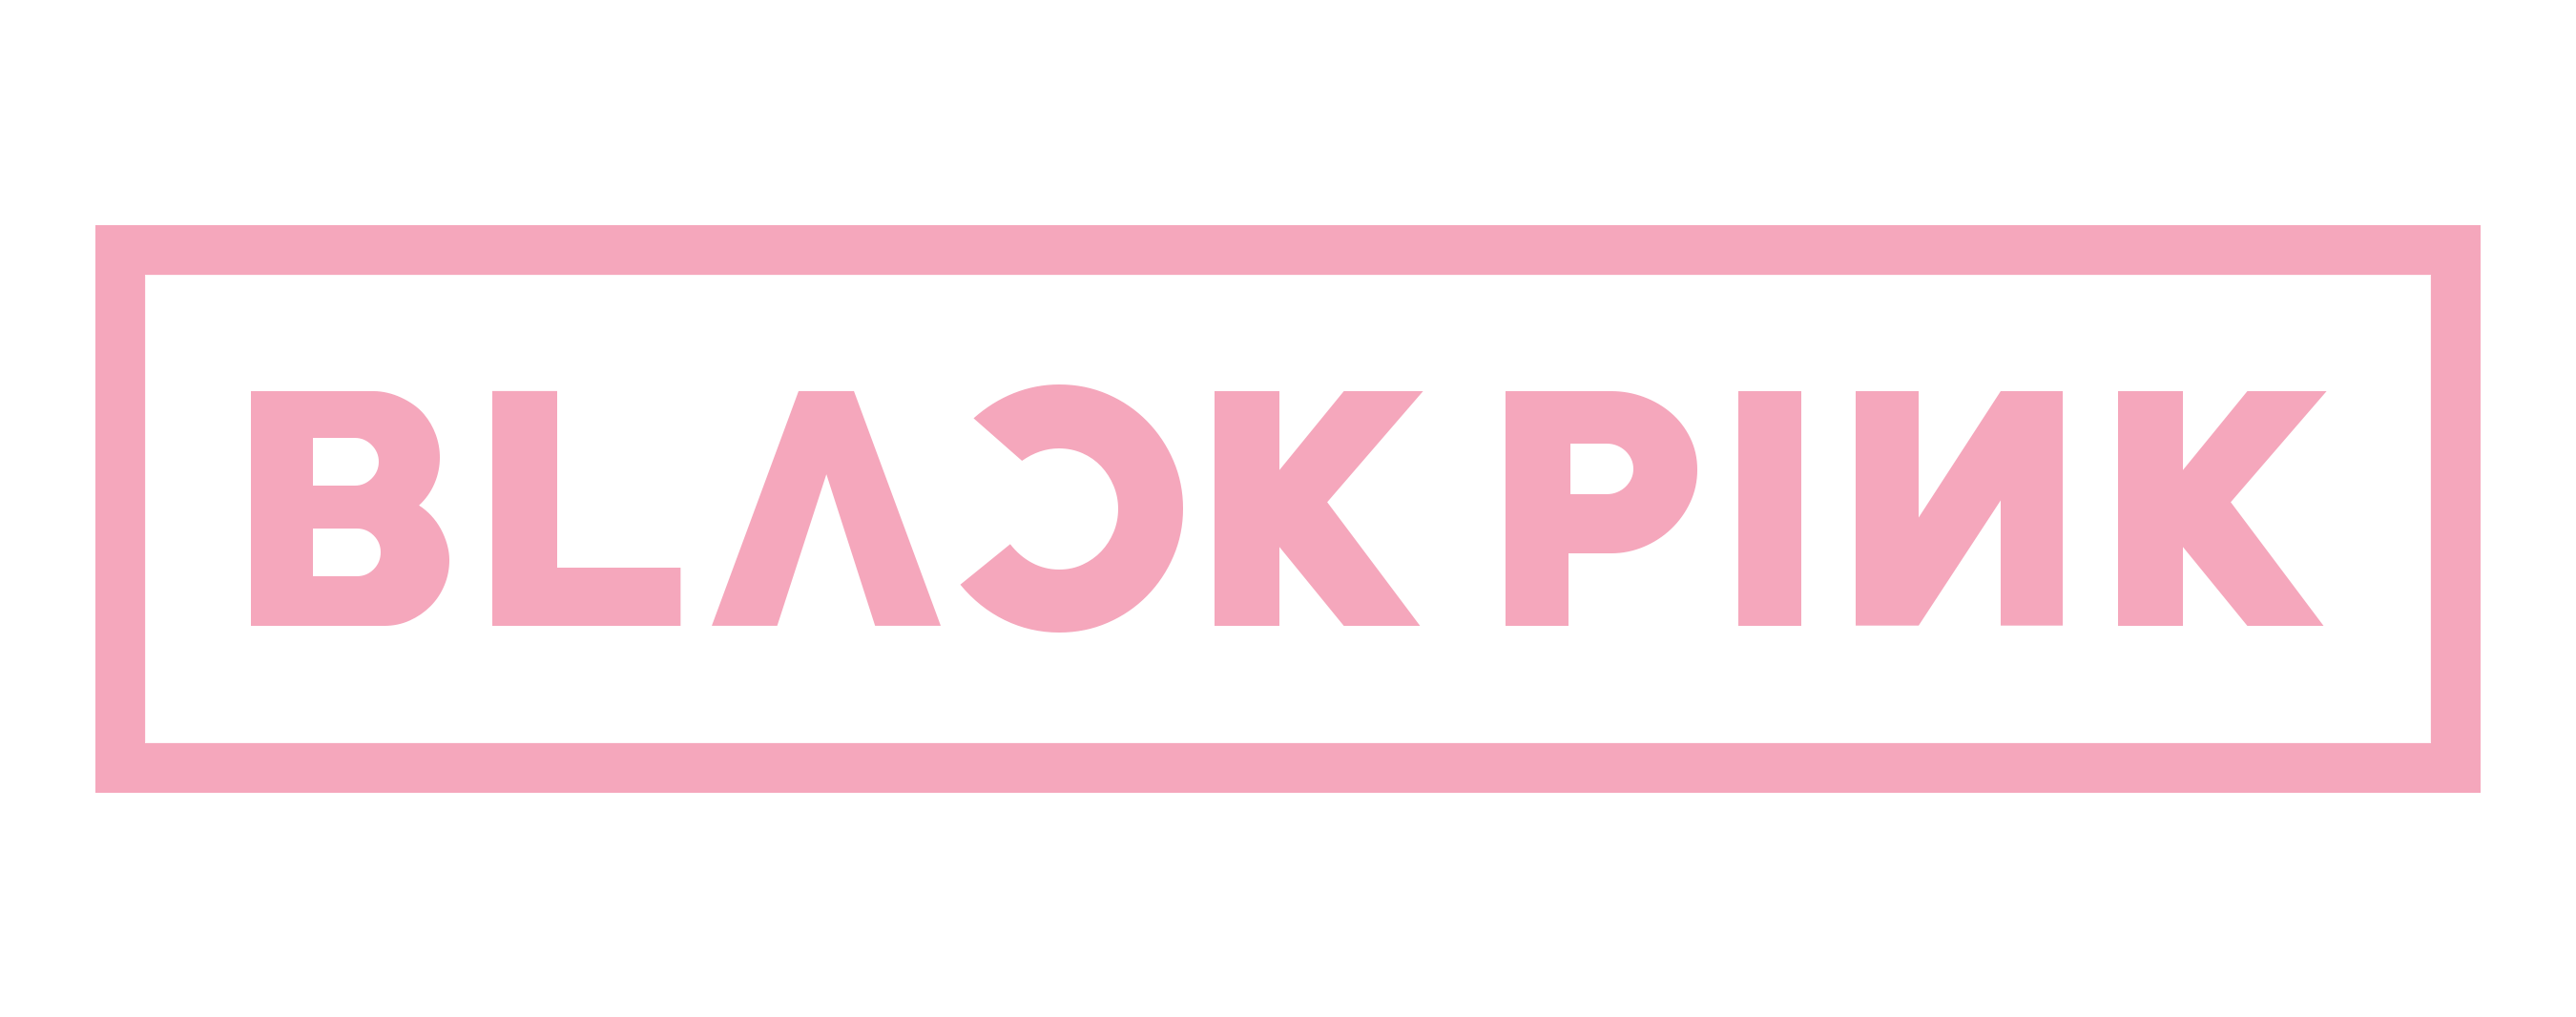 Blackpink logo png immagine